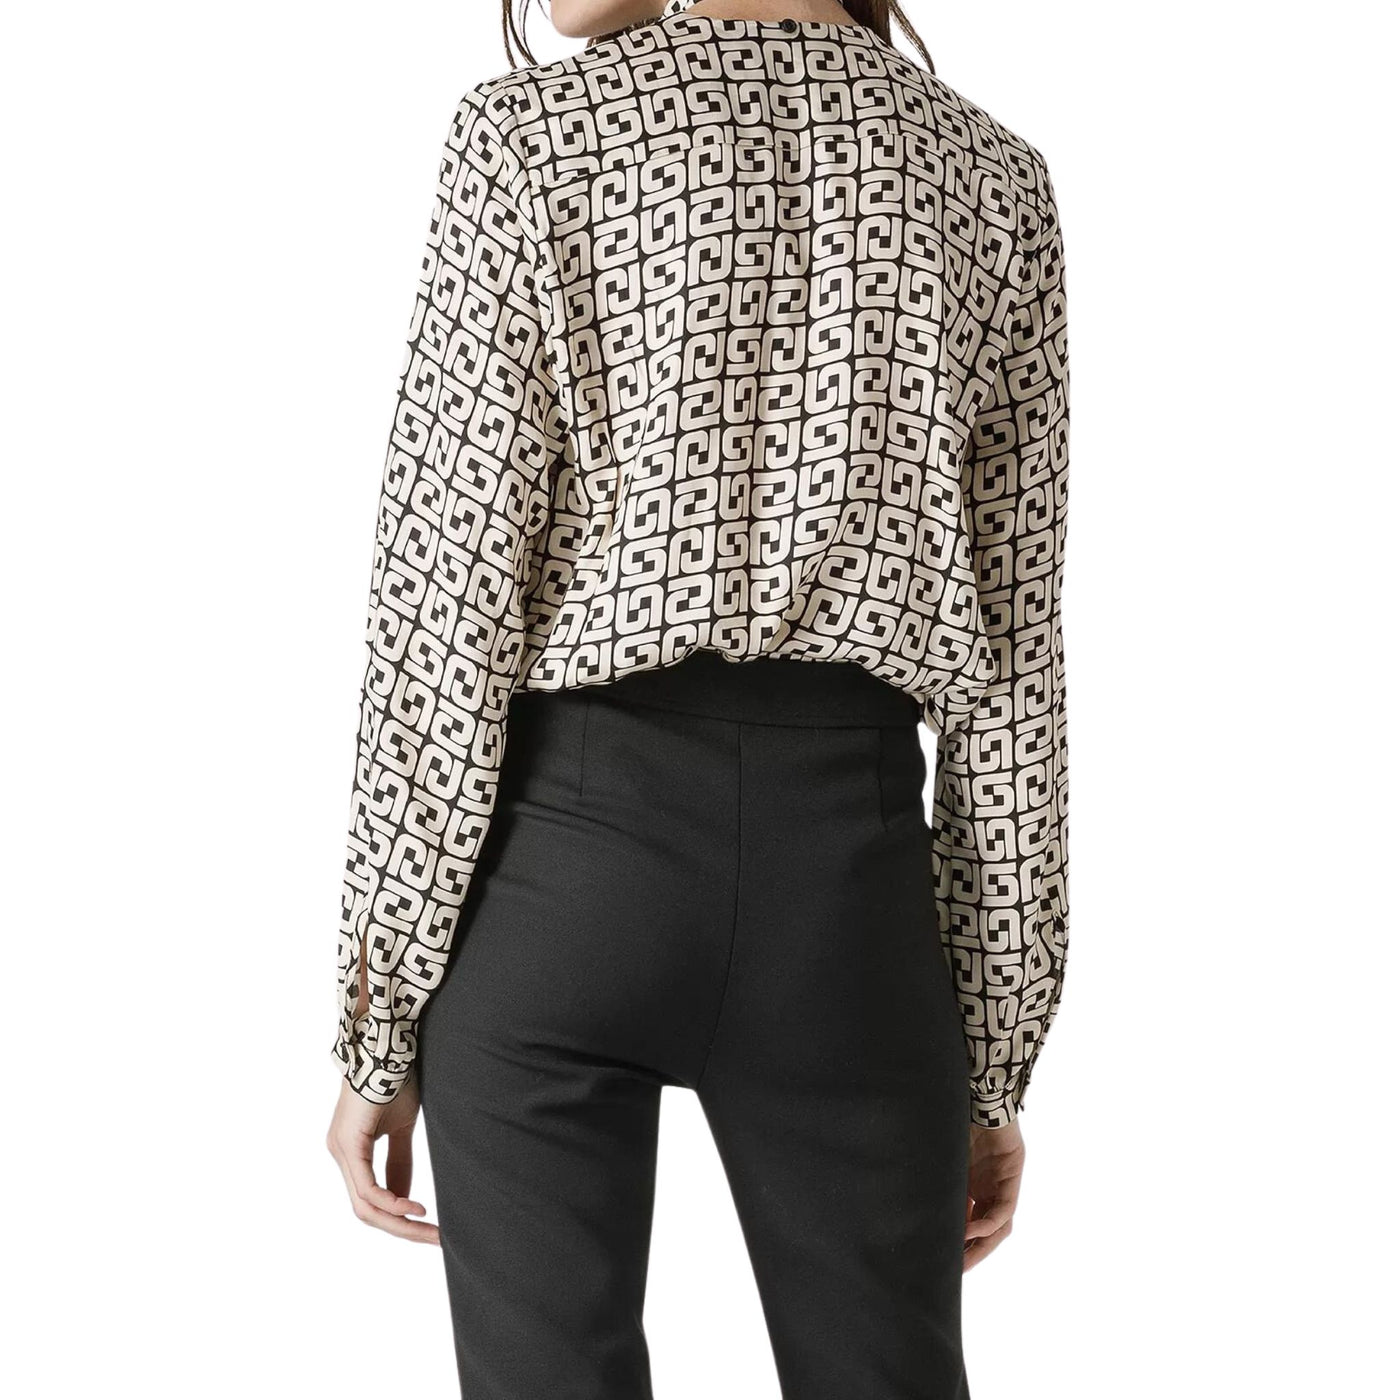 Women's shirt with geometric pattern